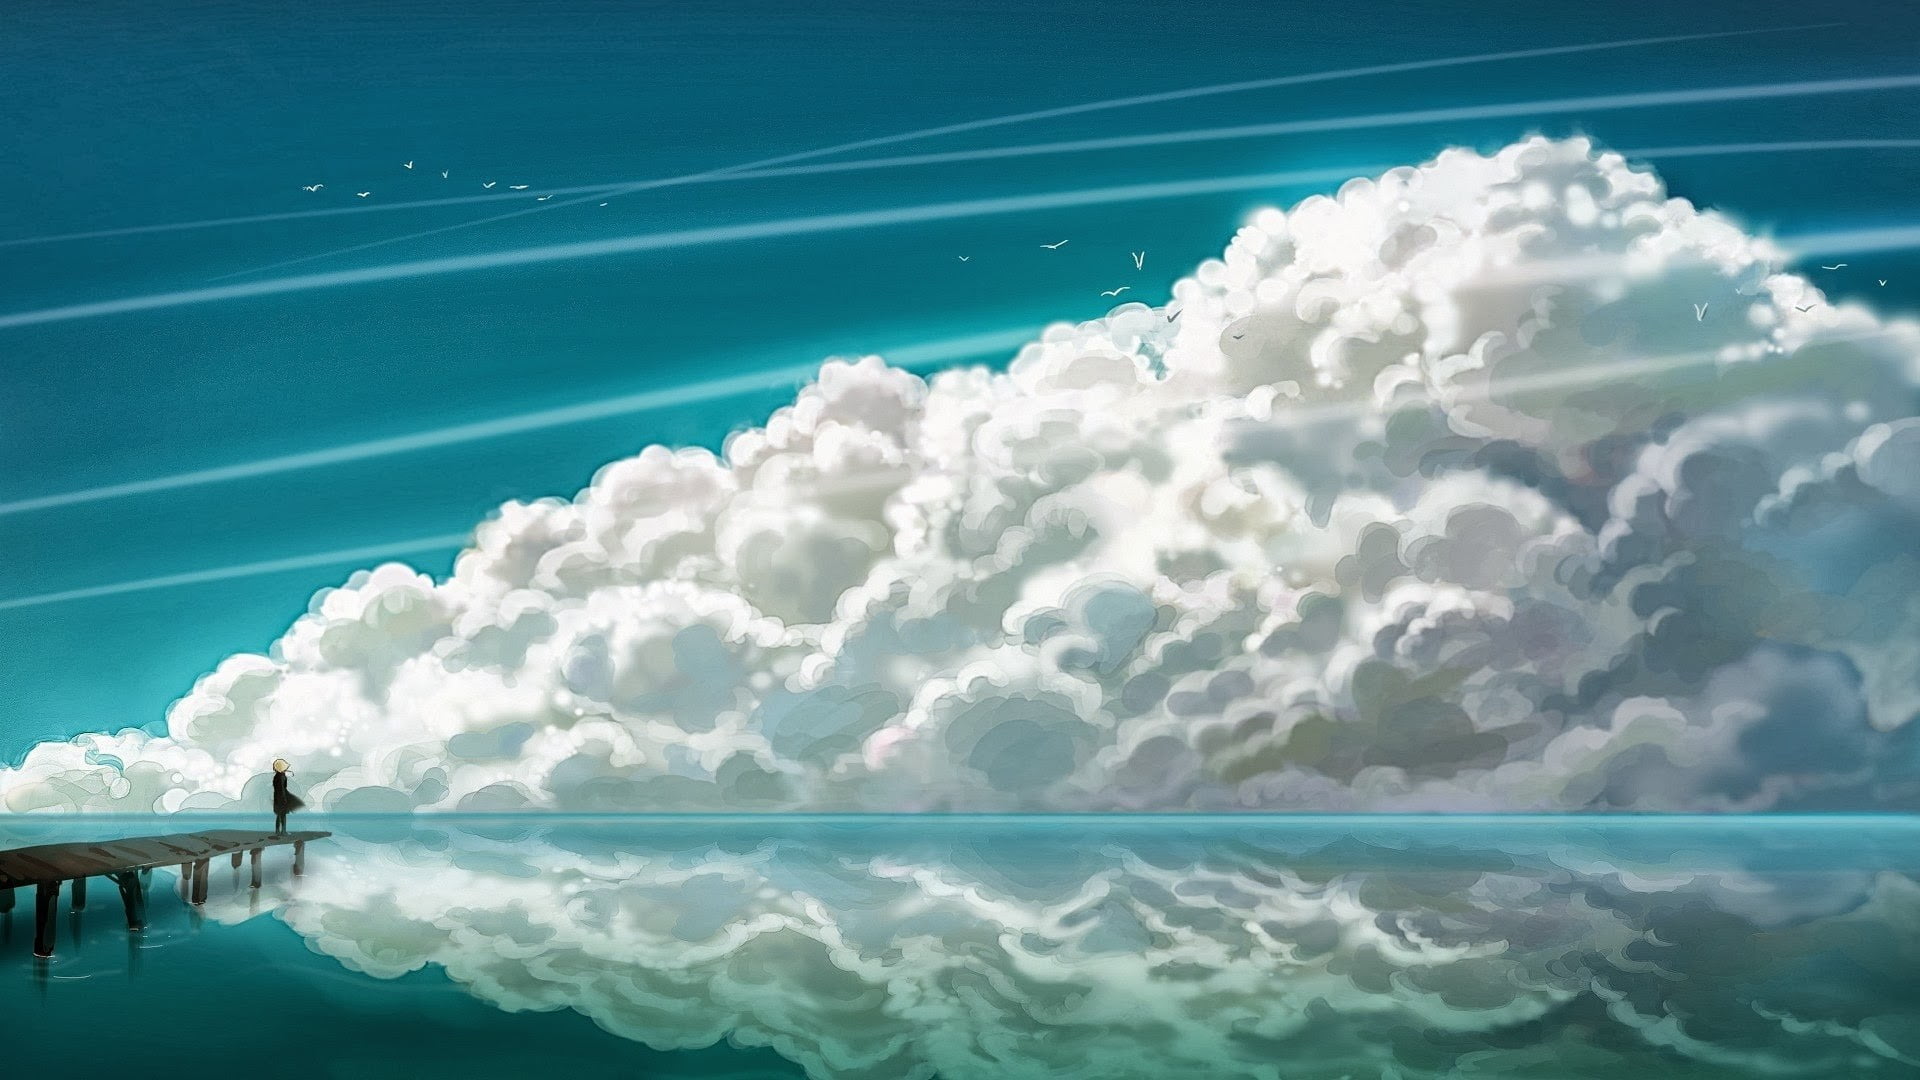 cloudy sky, clouds, cartoon, lake, water, reflection, anime, cloud - sky